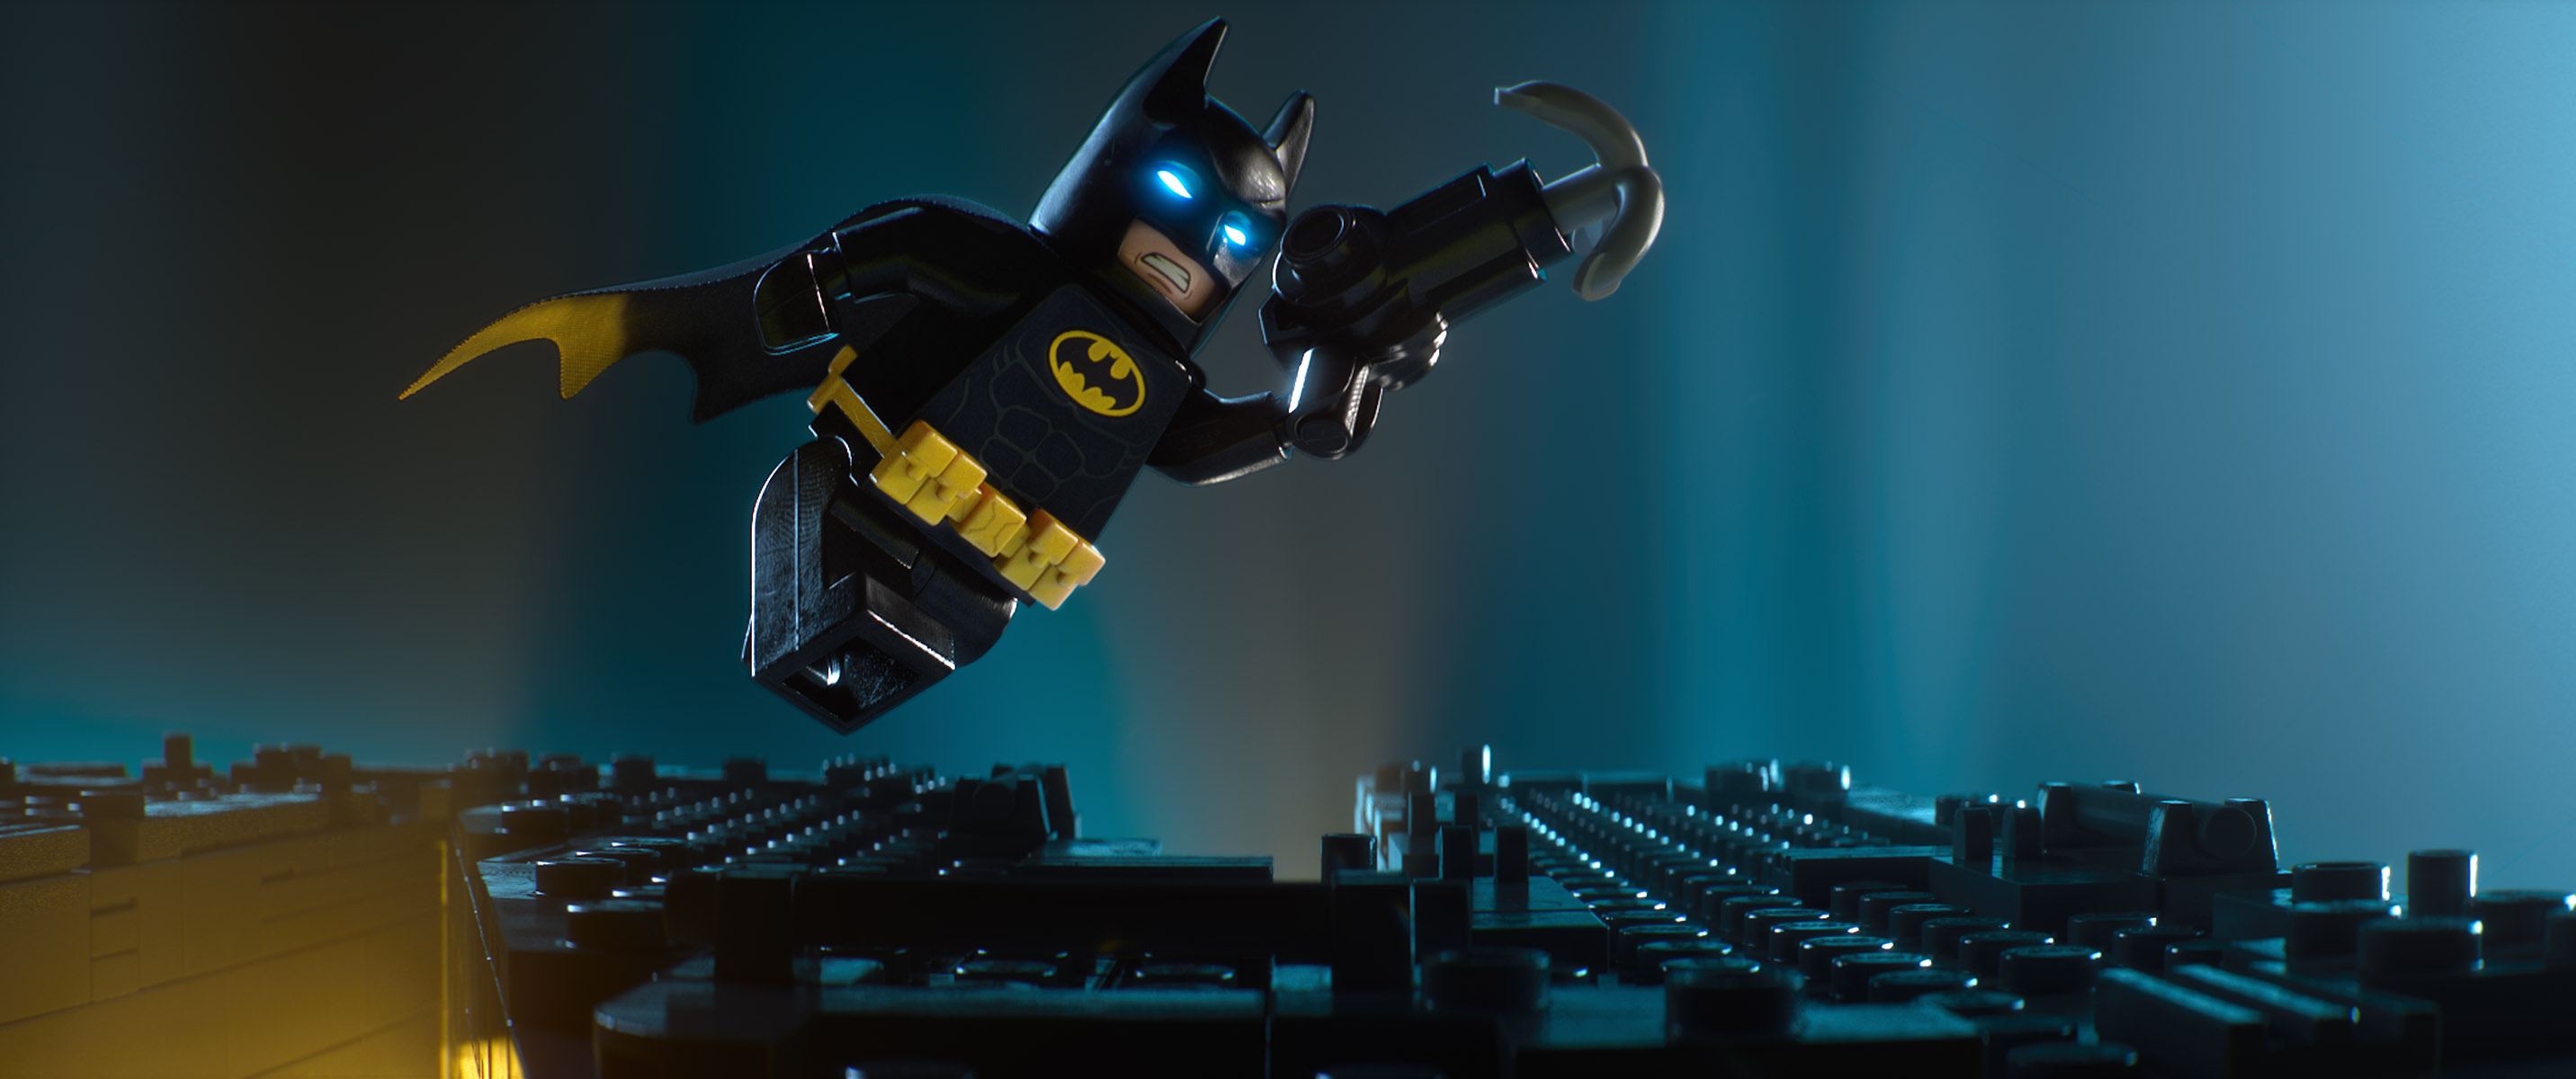 stream lego batman movie online free